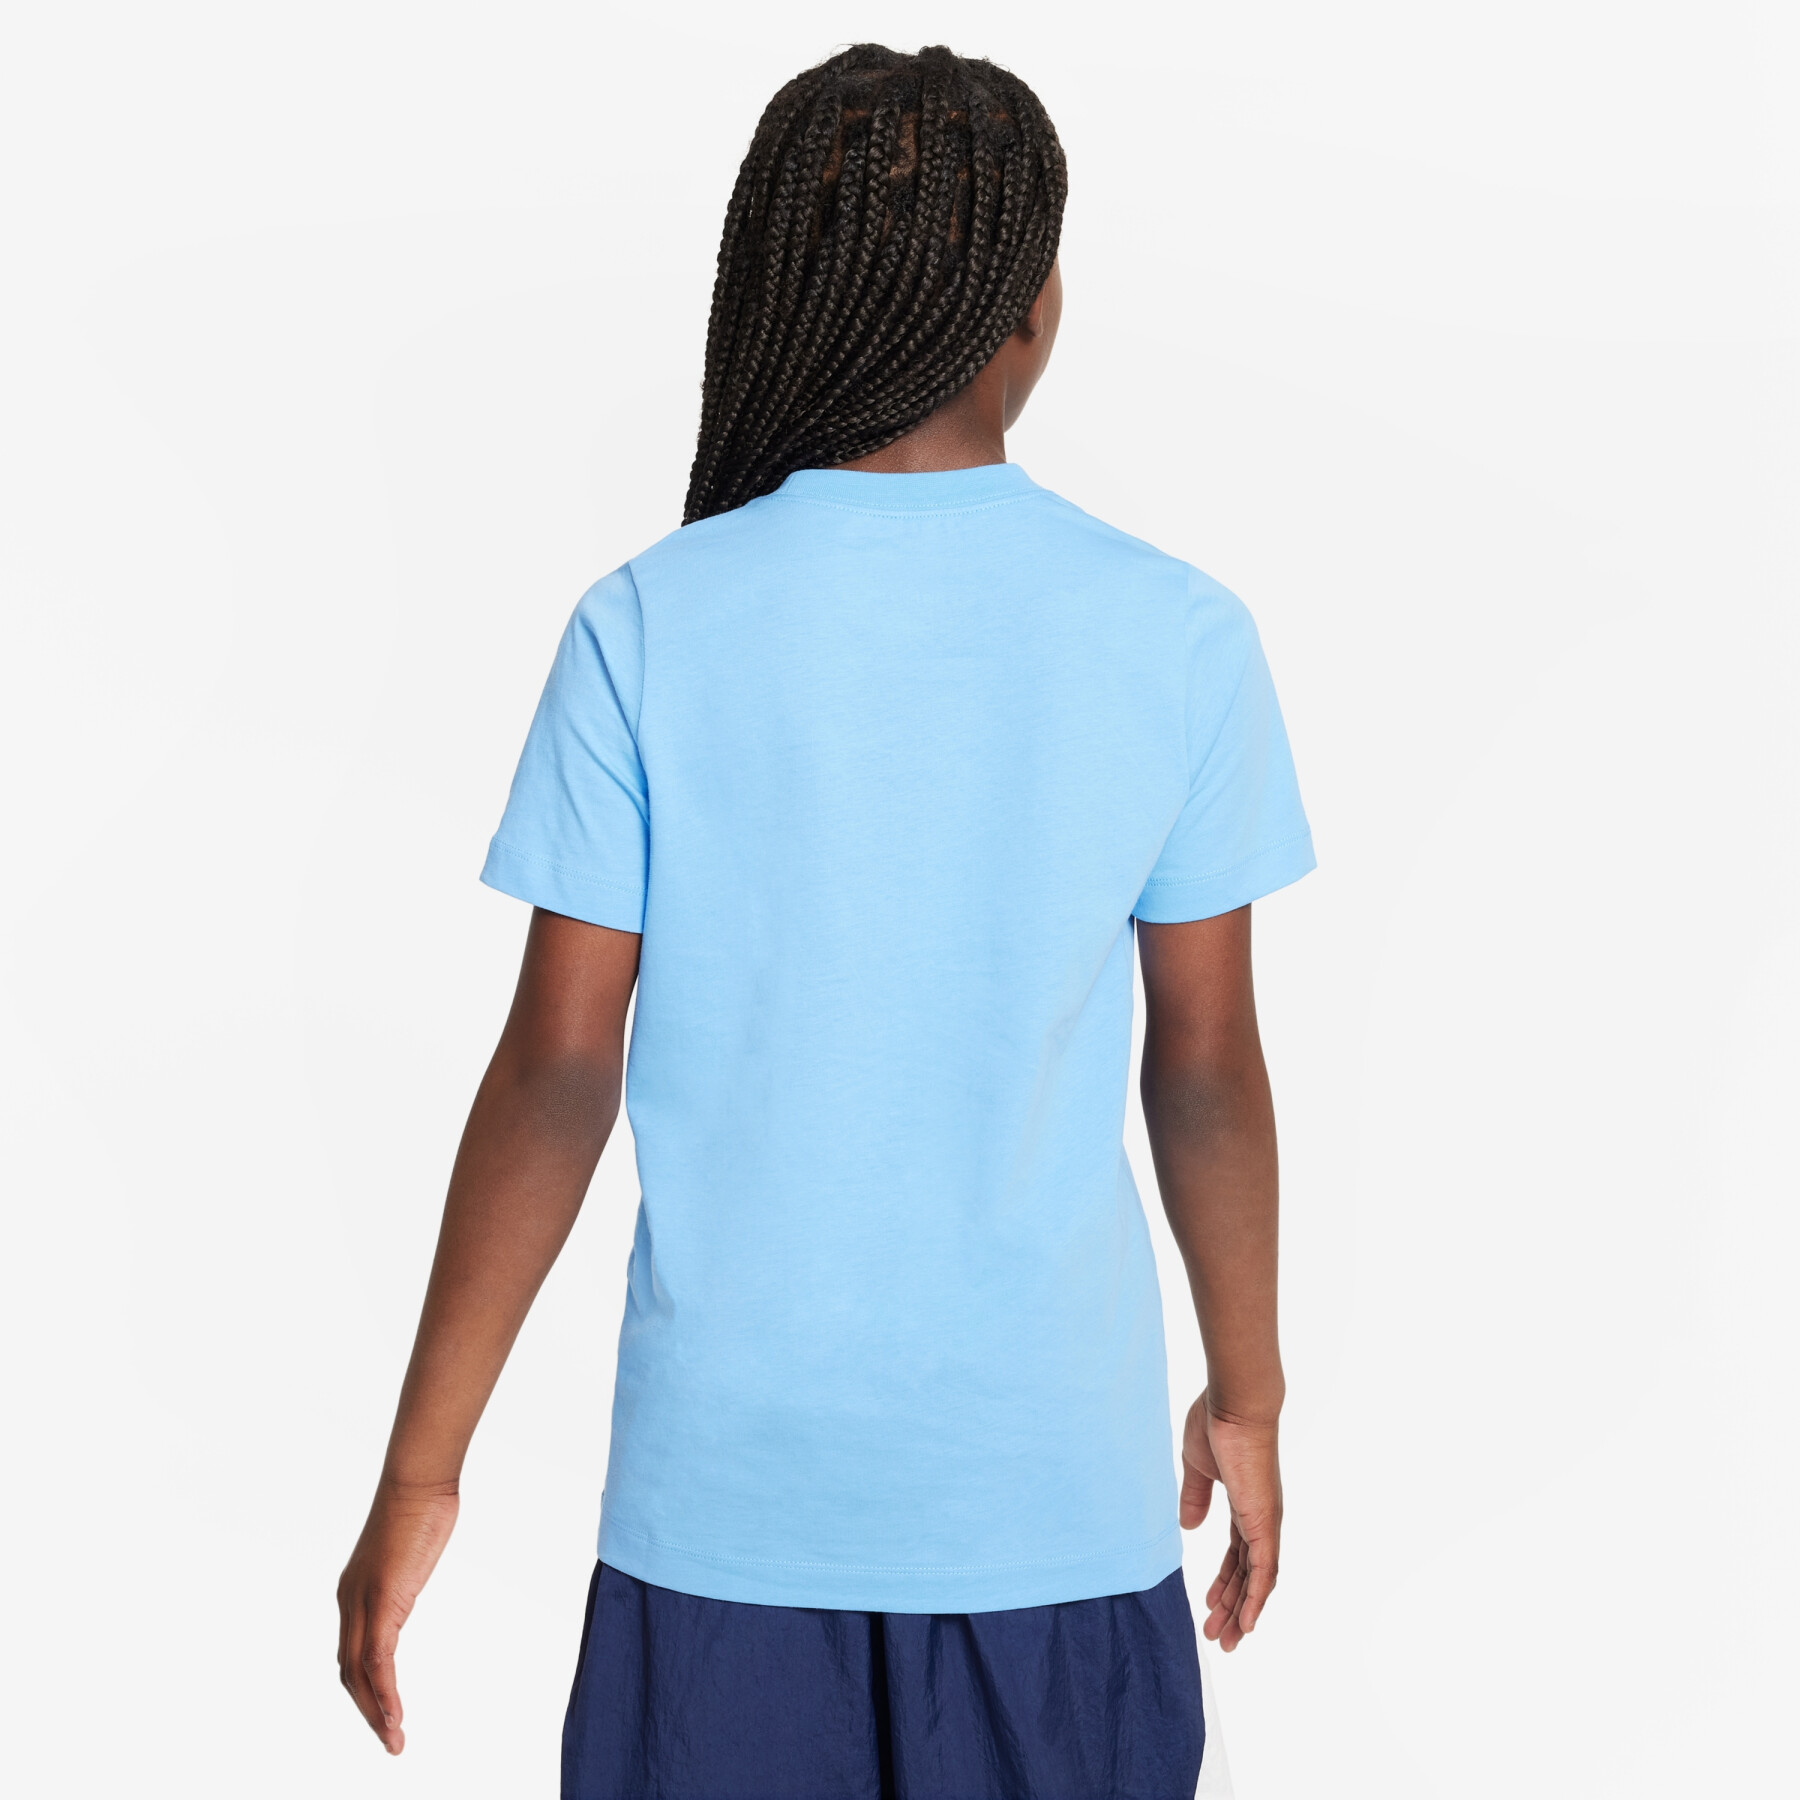 Camiseta infantil Nike